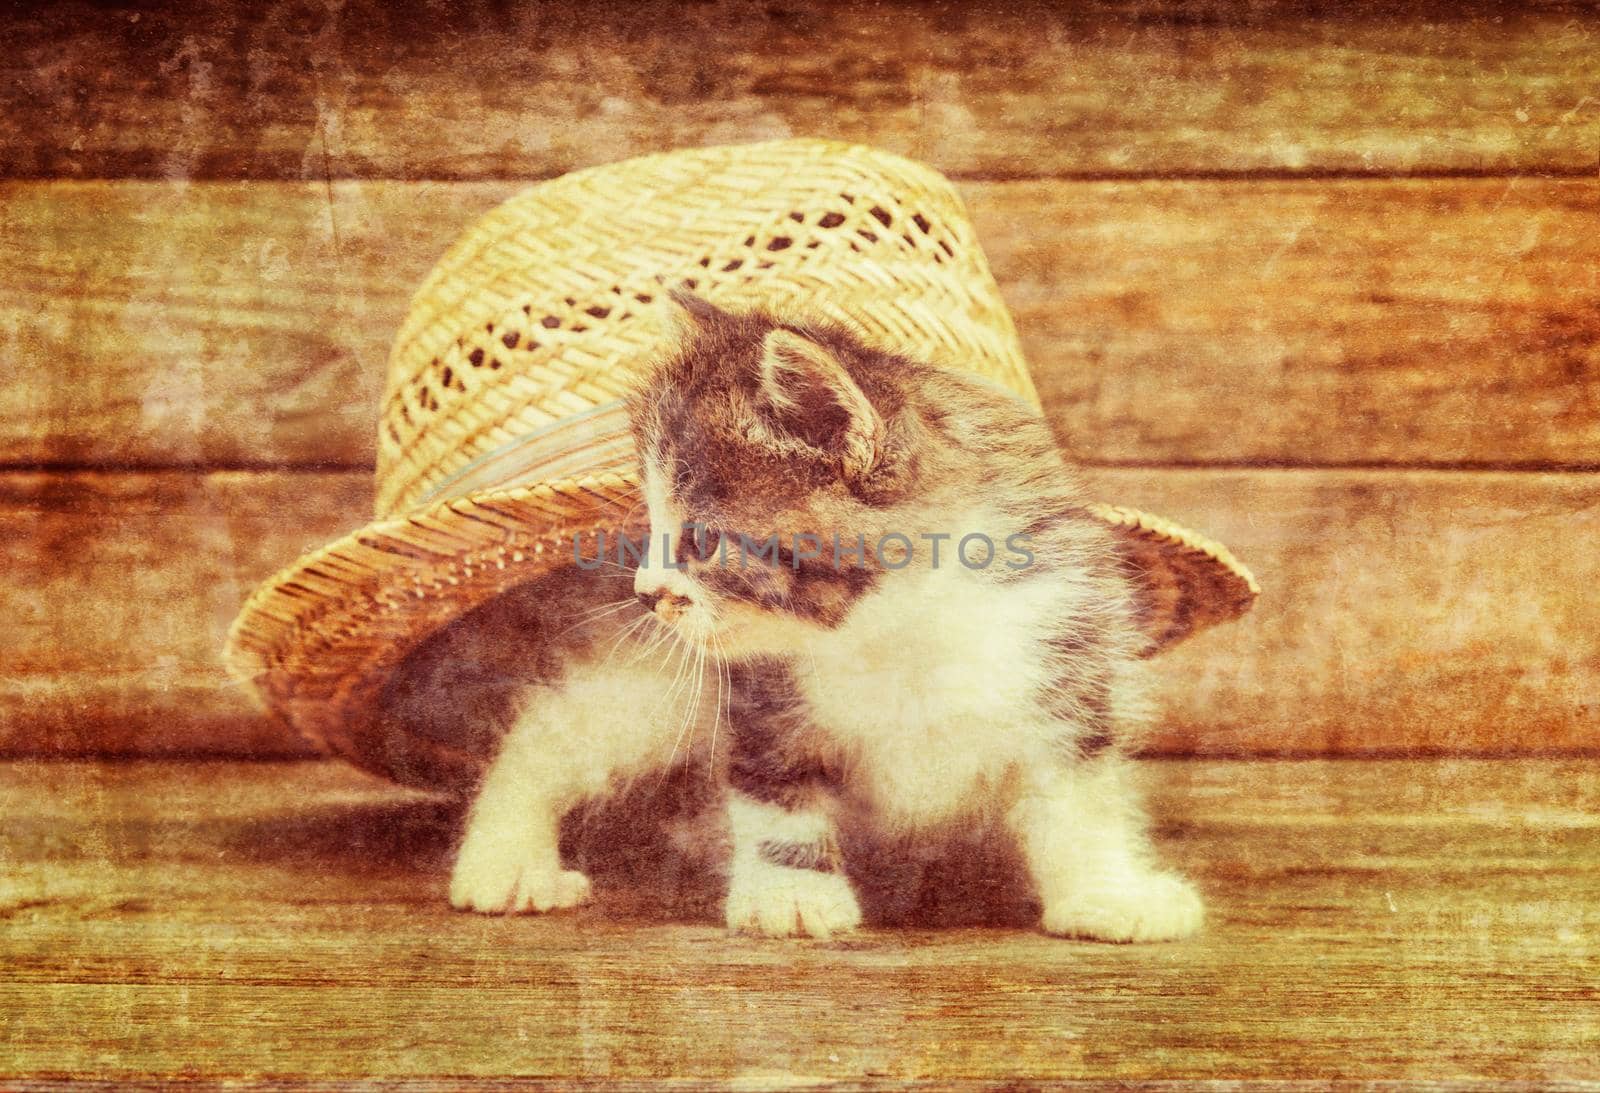 Curiosity little kitten sitting under the straw hat on wooden background. Vintage image